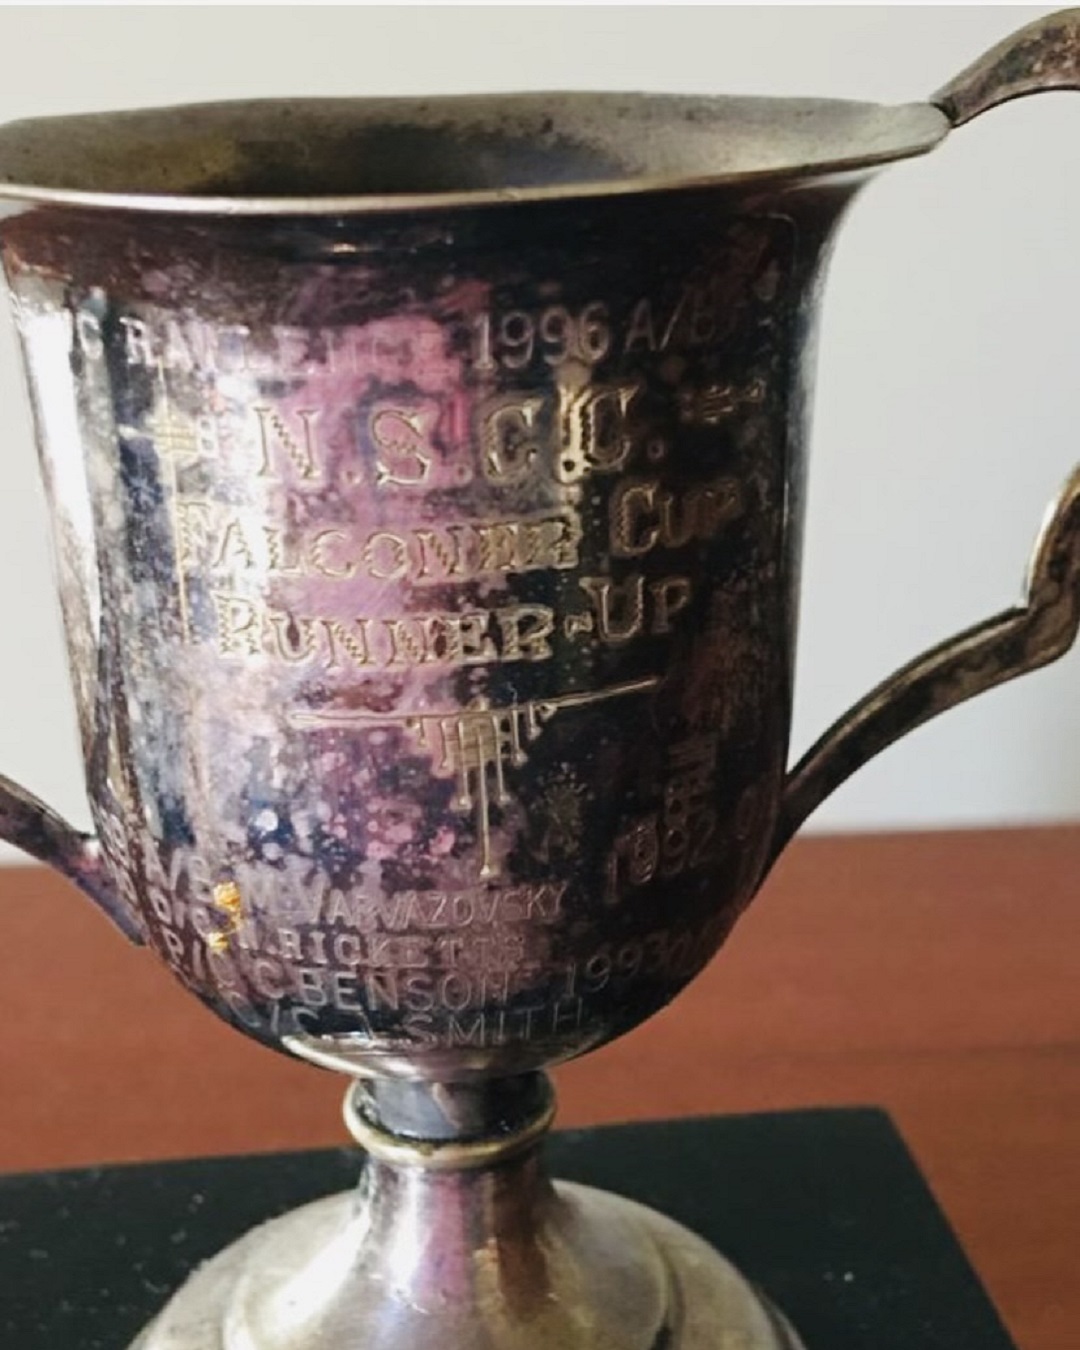 Vintage trophy NSCC Falconer cup